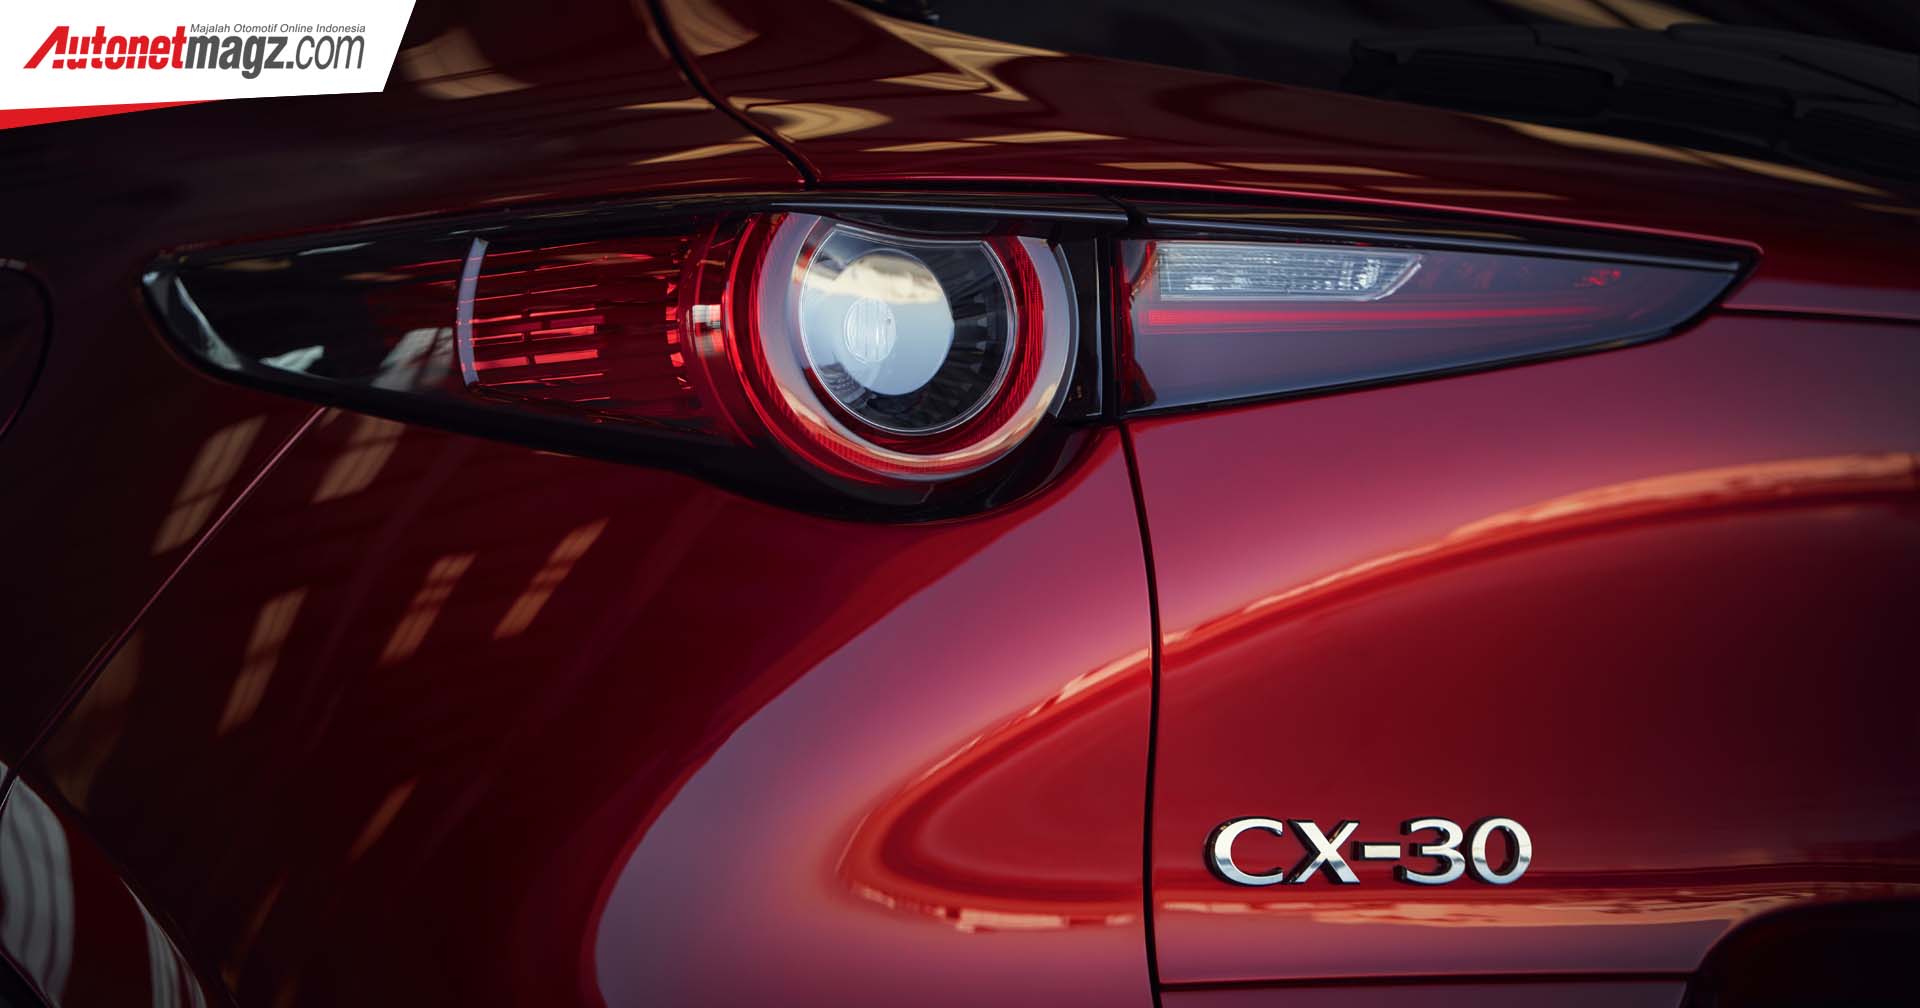 Berita, Lampu Belakang mazda CX-30: Geneva Motor Show 2019 : SUV Baru Mazda Bukan All New CX-3, Tapi CX-30